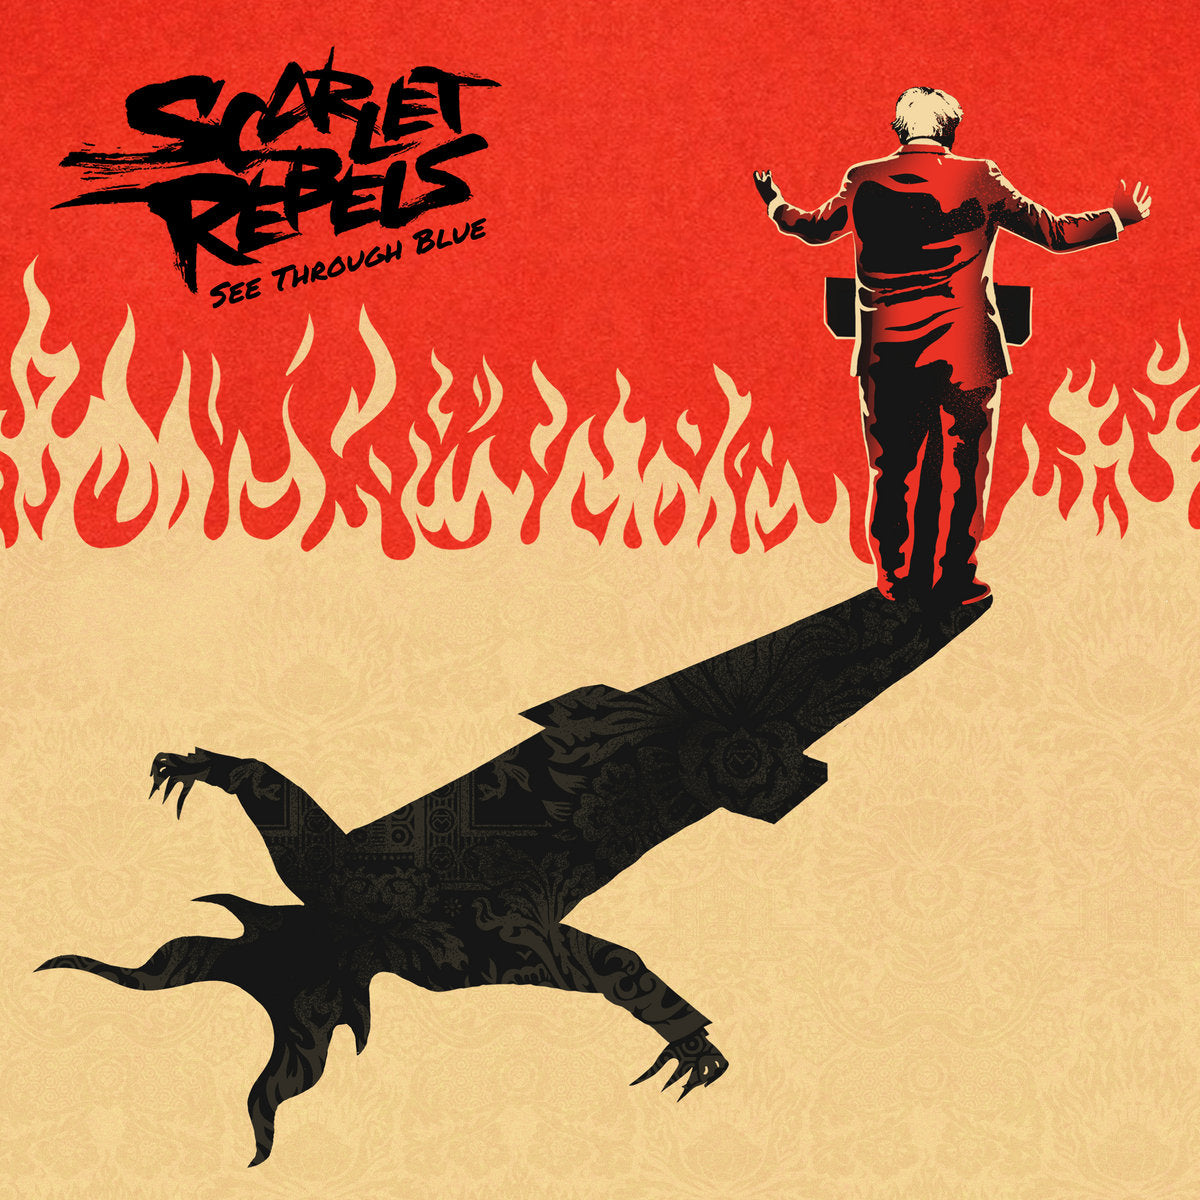 Scarlet Rebels "See Through Blue" Digital Download